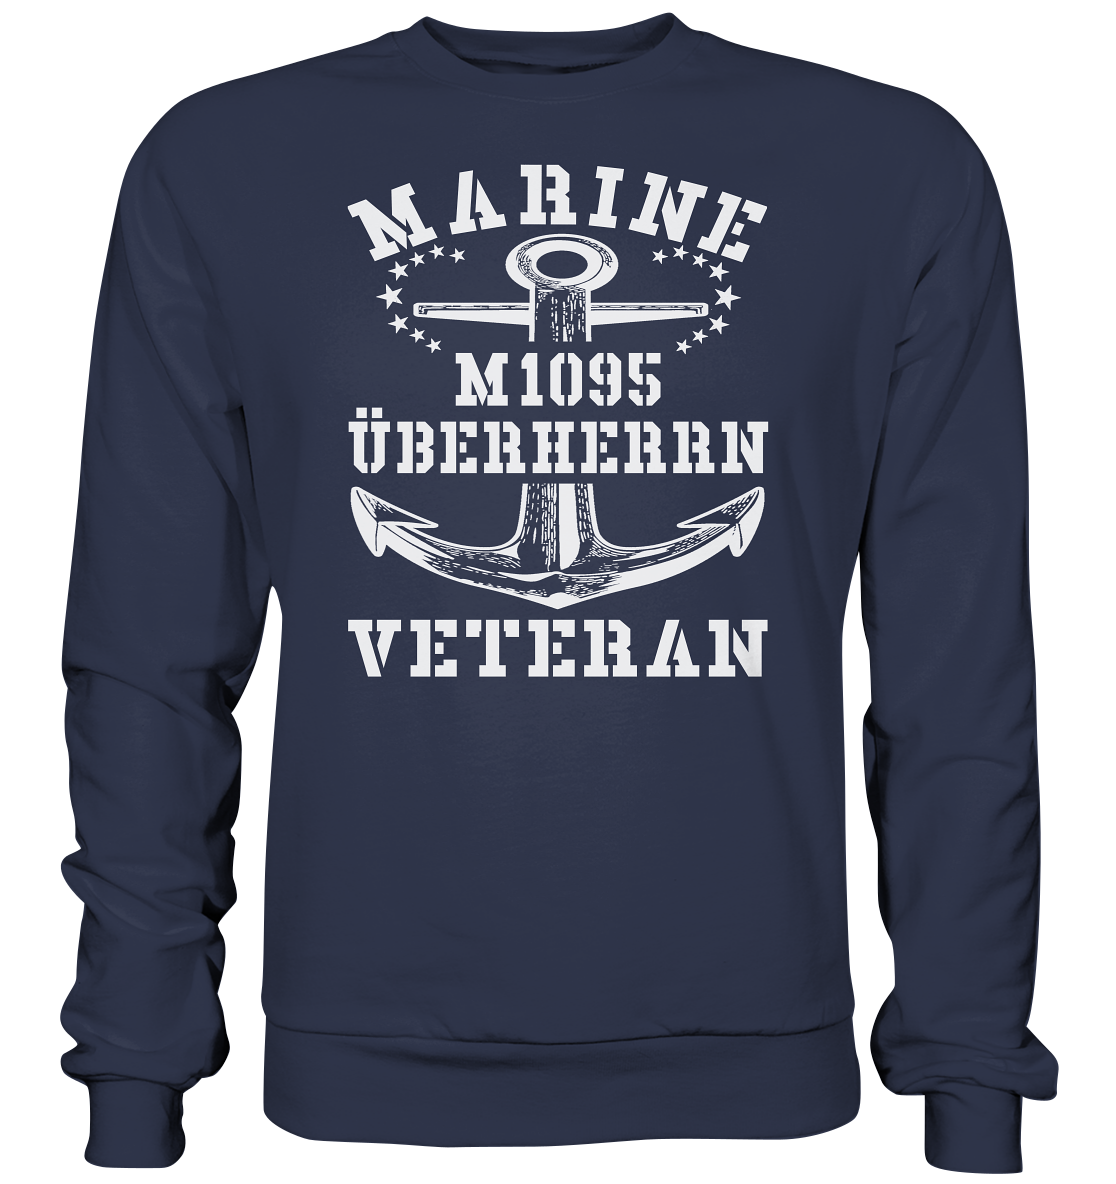 M1095 ÜBERHERRN Marine Veteran - Premium Sweatshirt